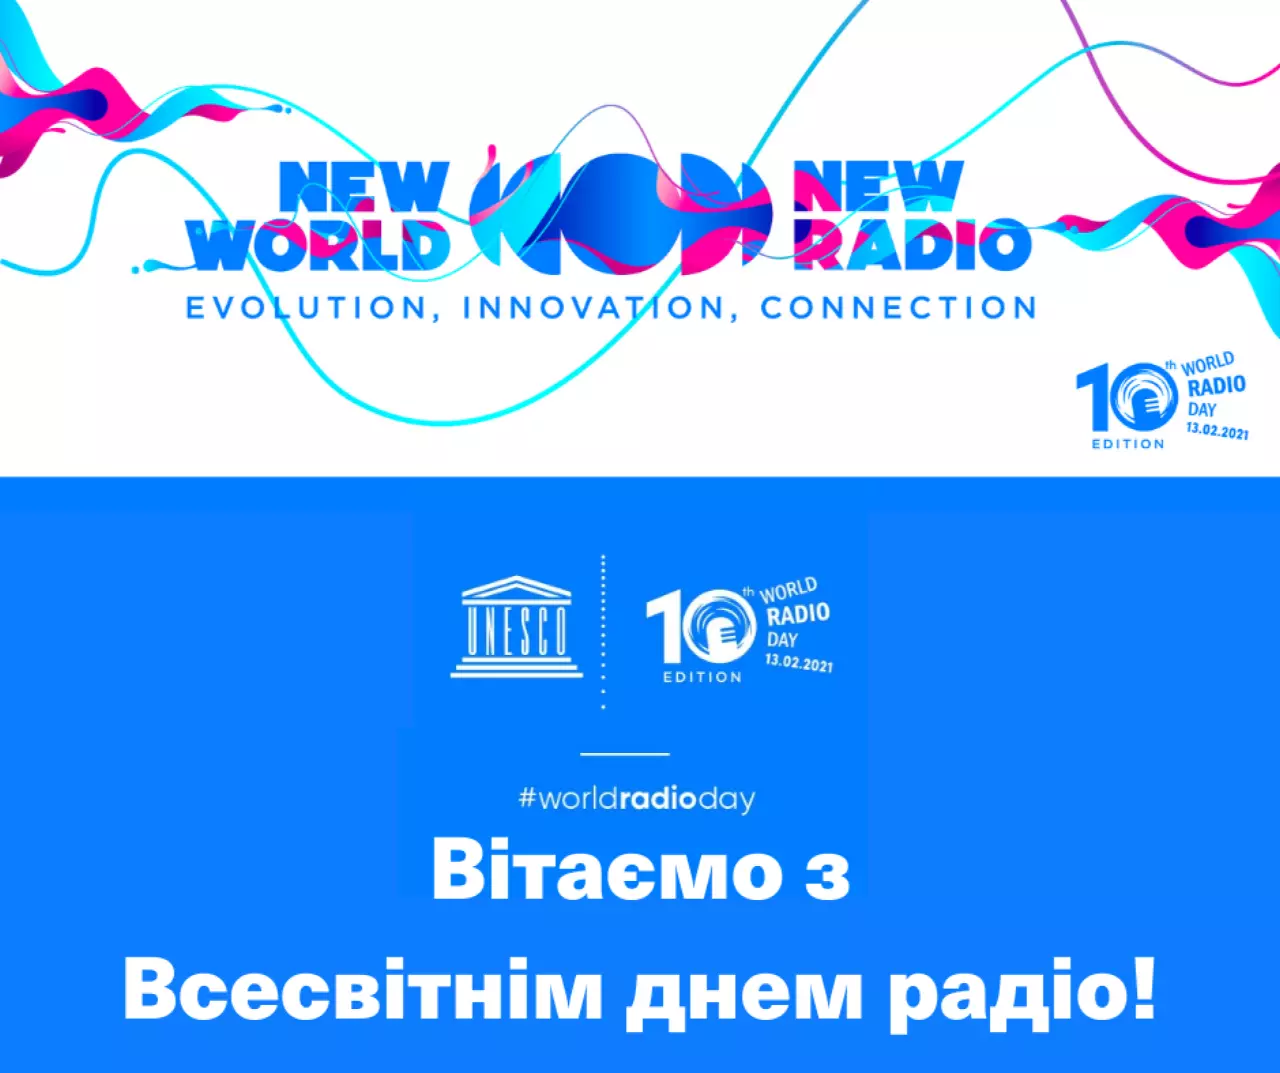 “New World, New Radio”: UNESCO's Congratulations to the World Radio Day